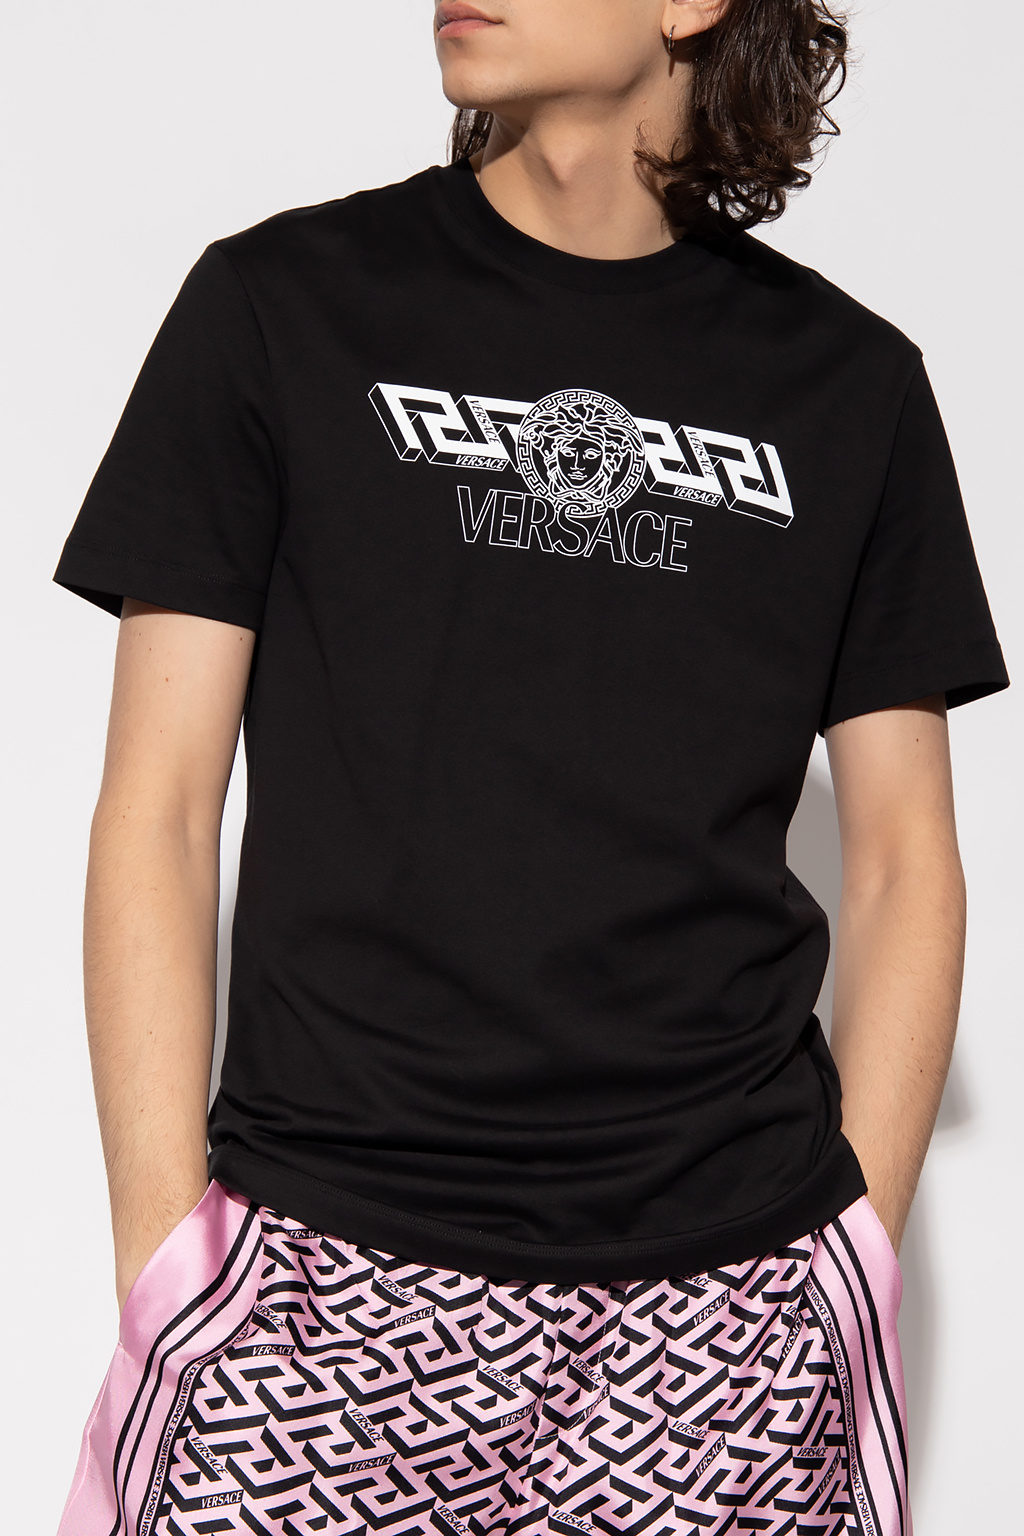 Versace Printed Crew Neck Short Sleeve T-Shirt